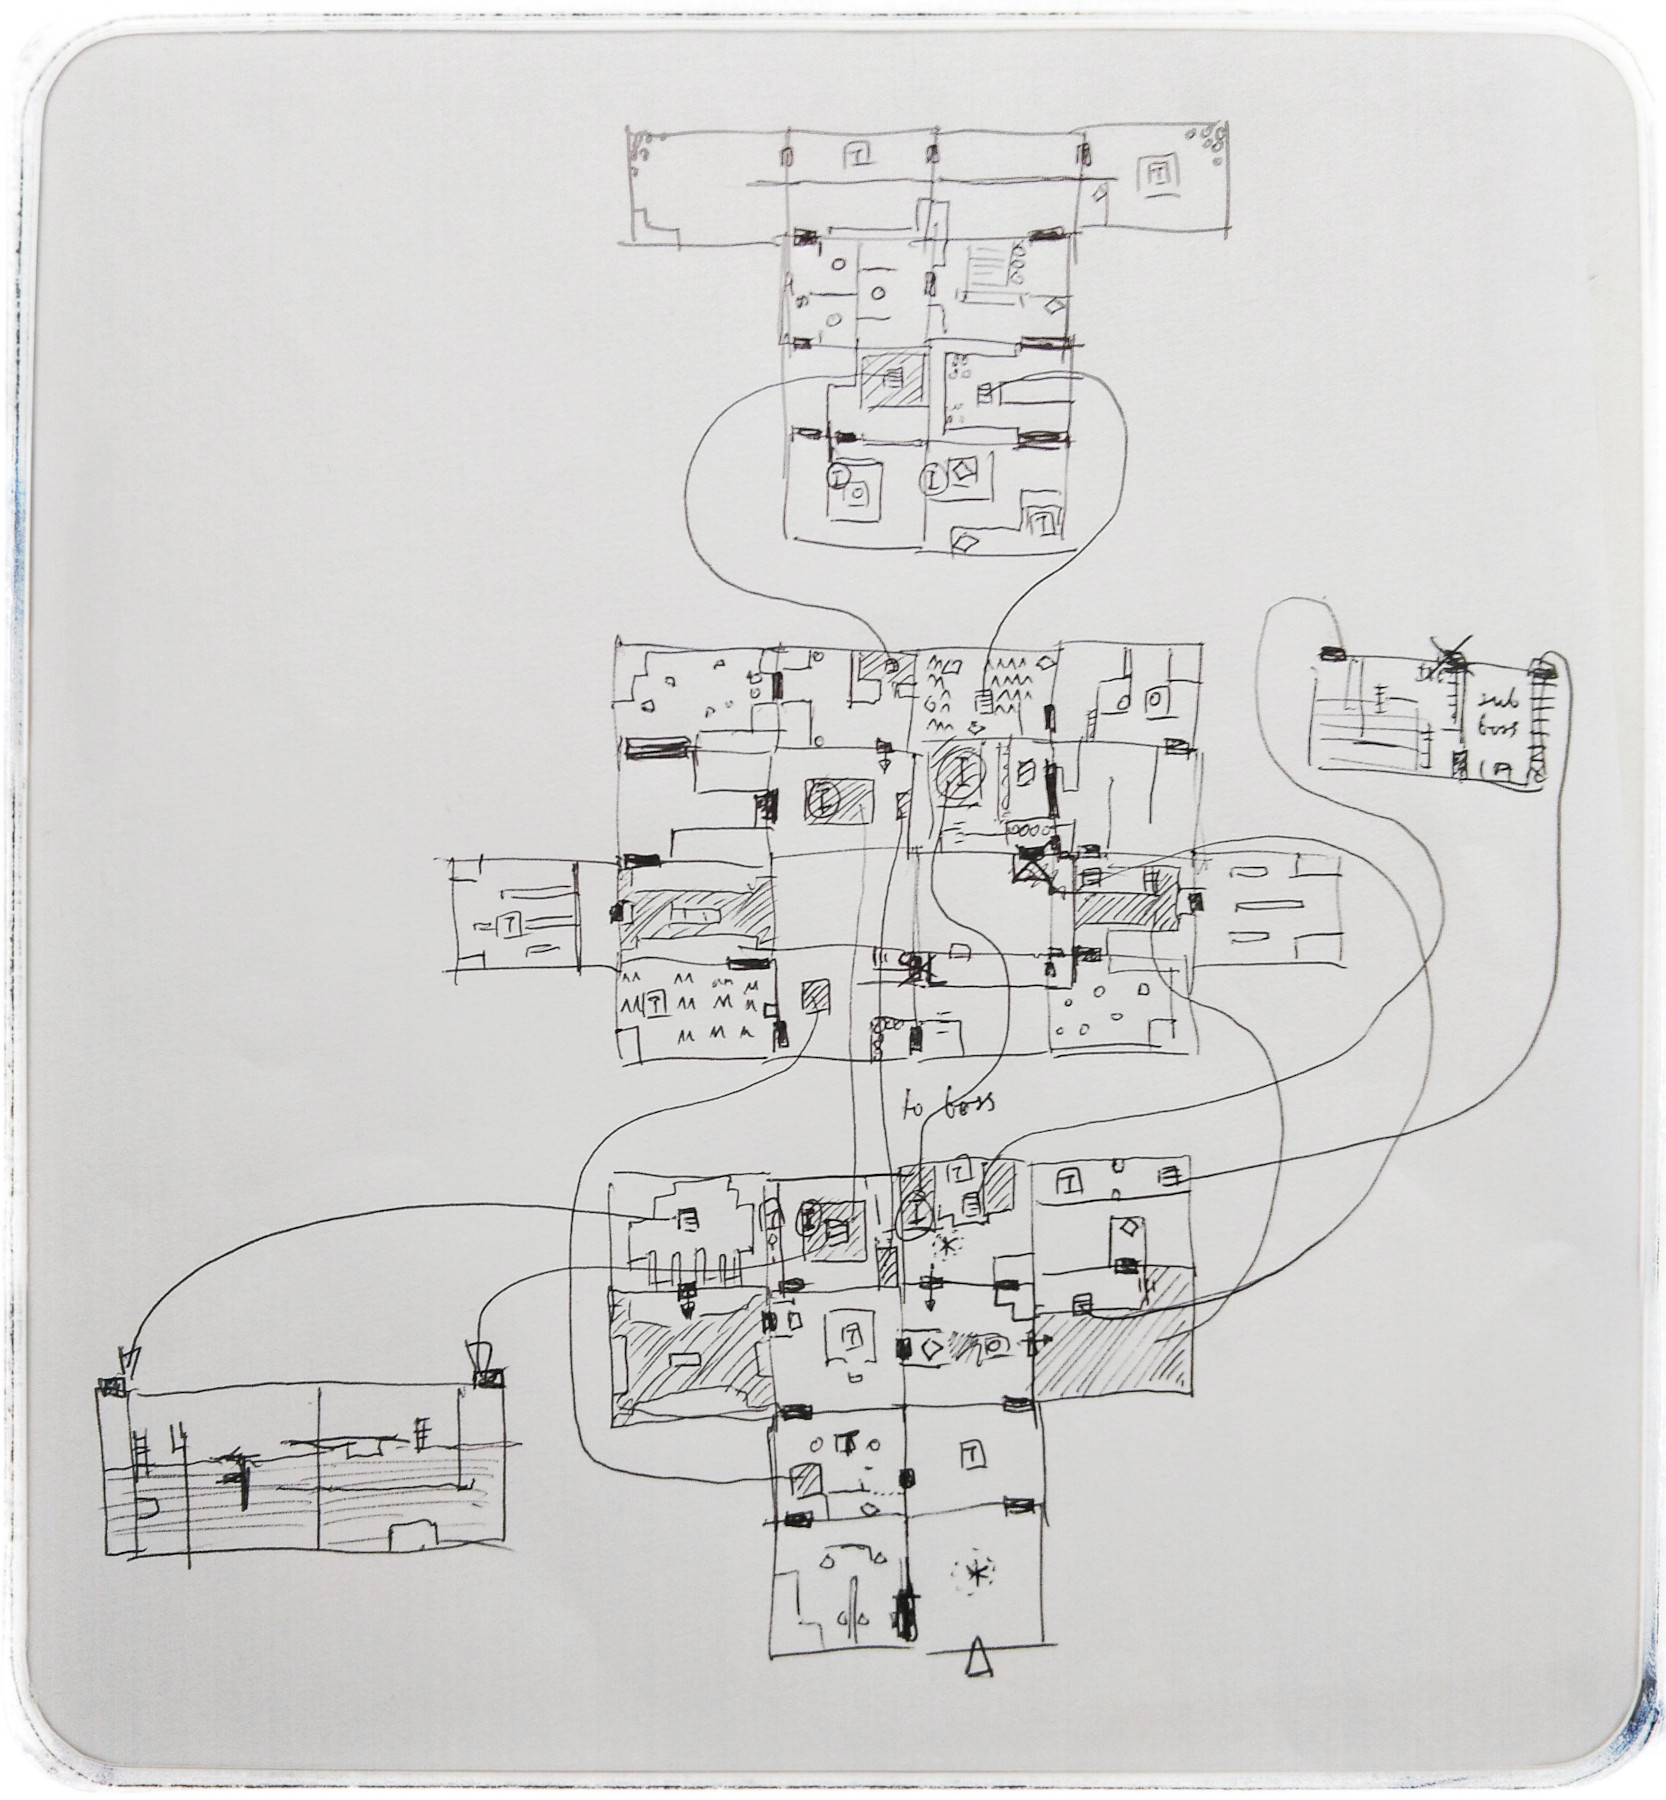 A hand-drawn map of the Jabu-Jabu Belly dungeon